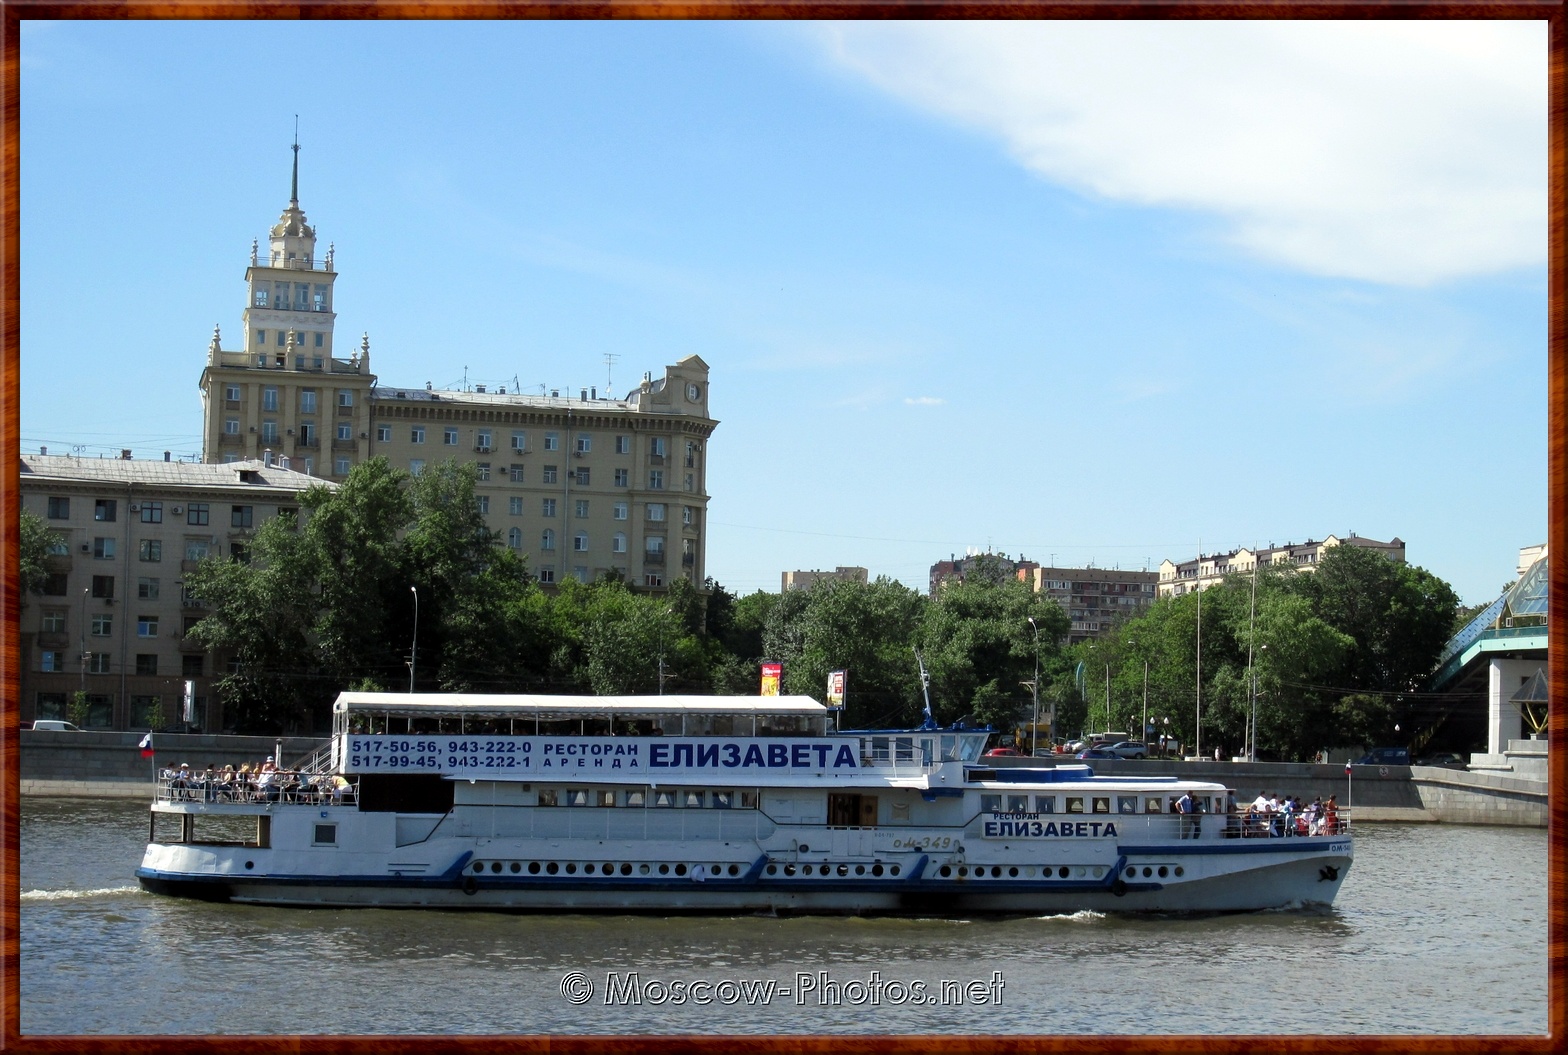 Ship "Elizabeth" on Moscow River (2012)